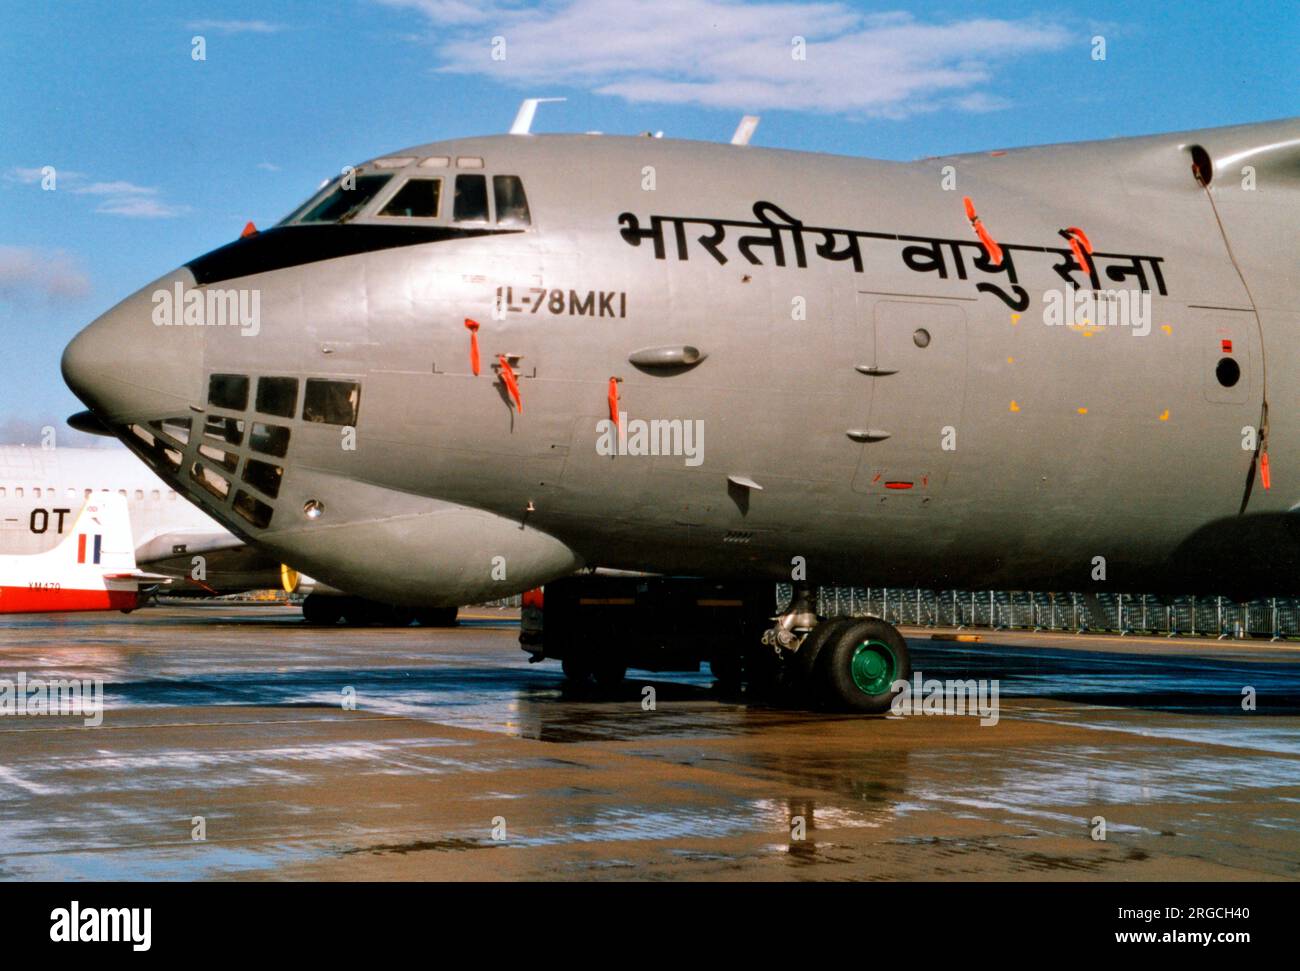 Indian Air Force - Ilyushin Il-78MKI RK3452 (msn 2043425860), of 78 Squadron. Stock Photo